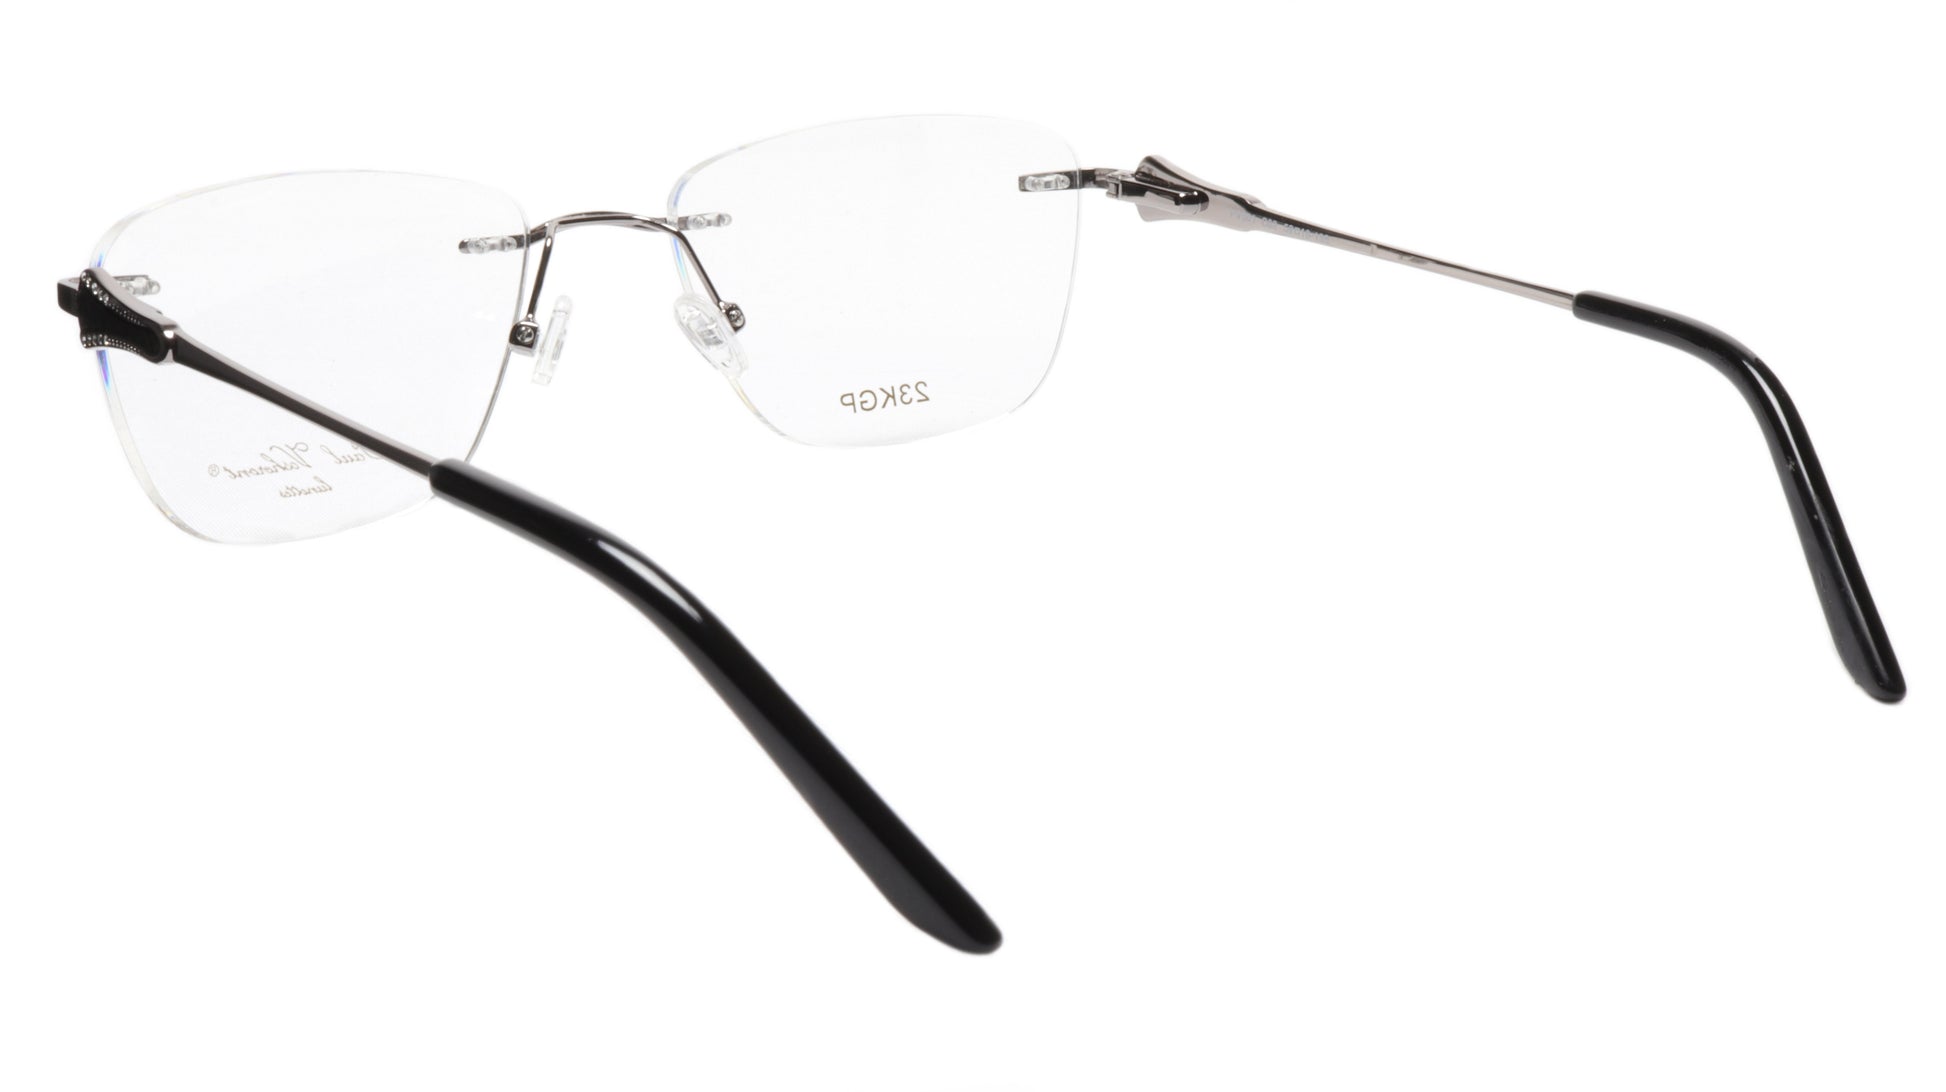 Paul Vosheront Eyeglasses Frame PV501 C02 Gold Plated Acetate Italy 52-18-135 37 - Frame Bay